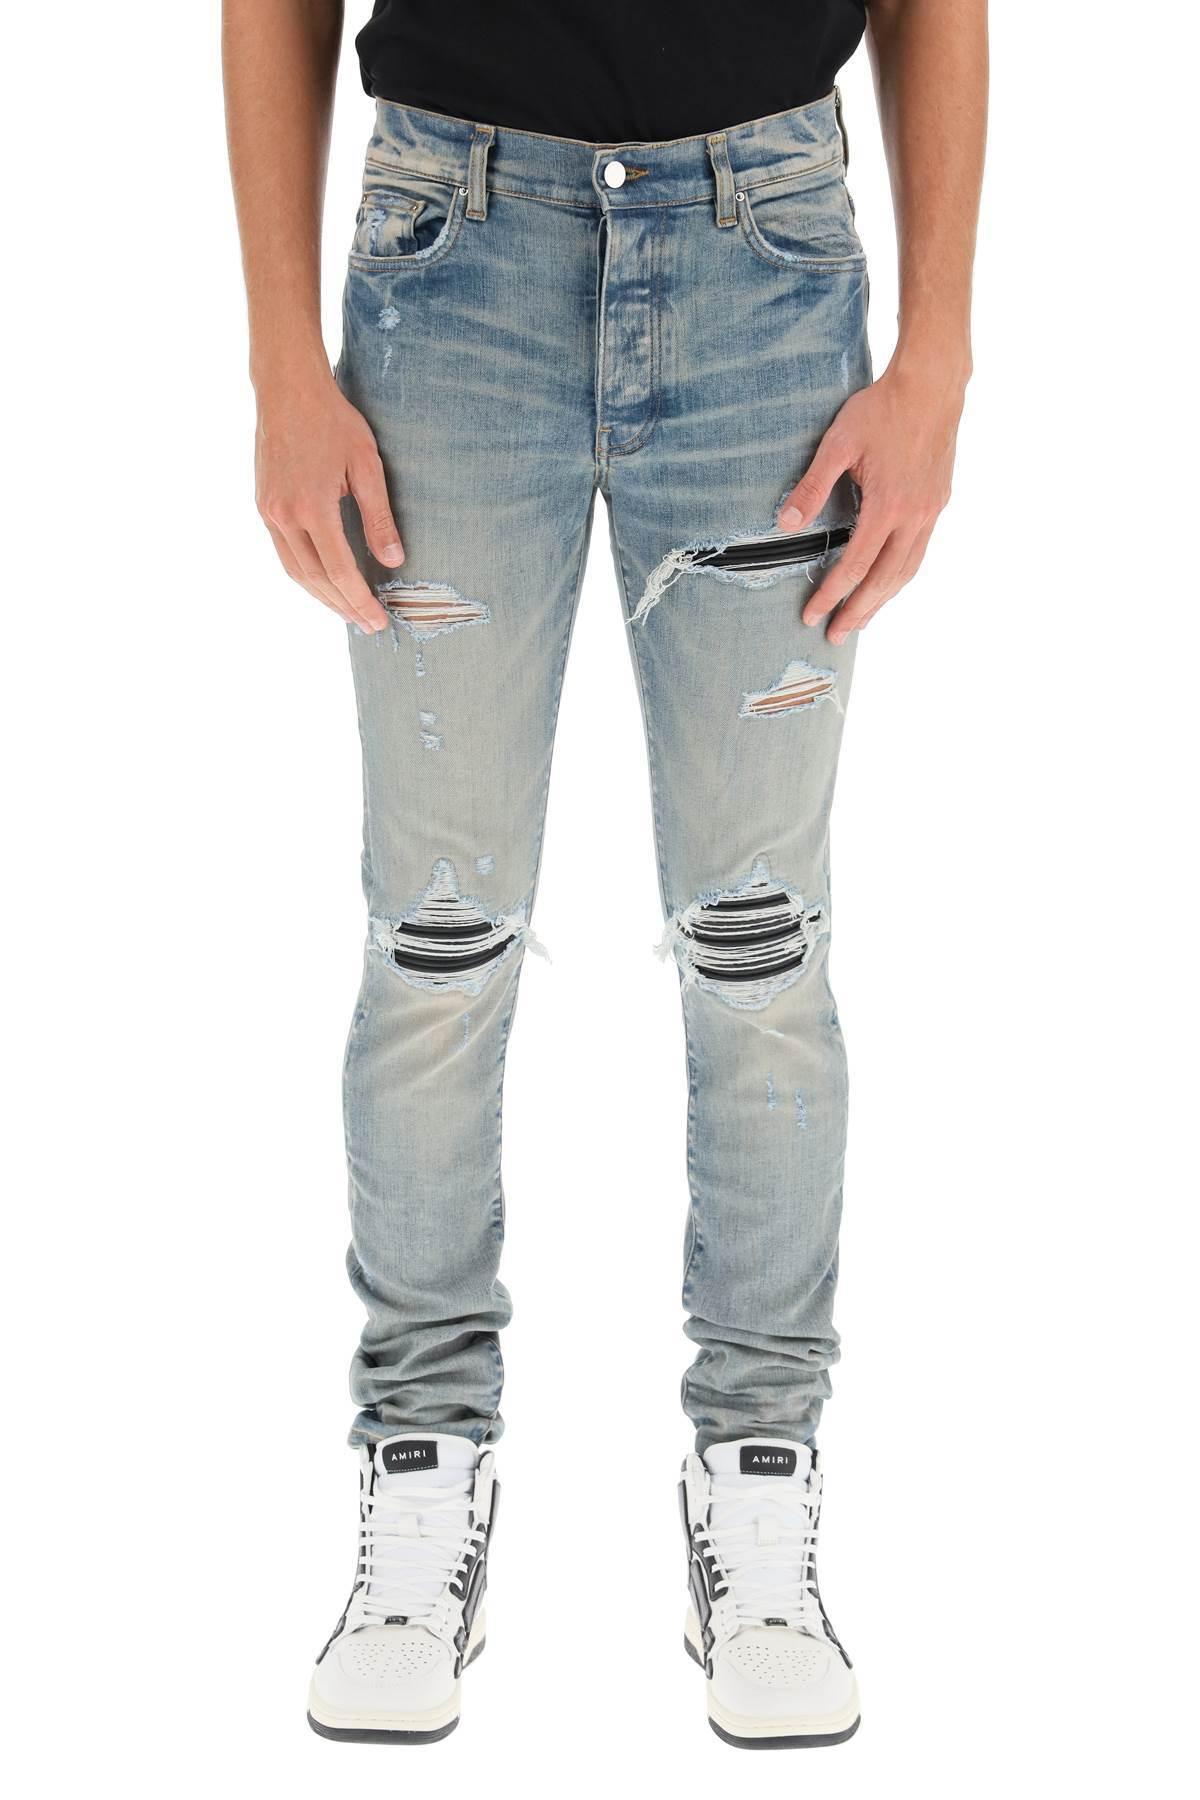 Amiri Denim Mx1 Clay Indigo Jeans in Blue for Men - Lyst